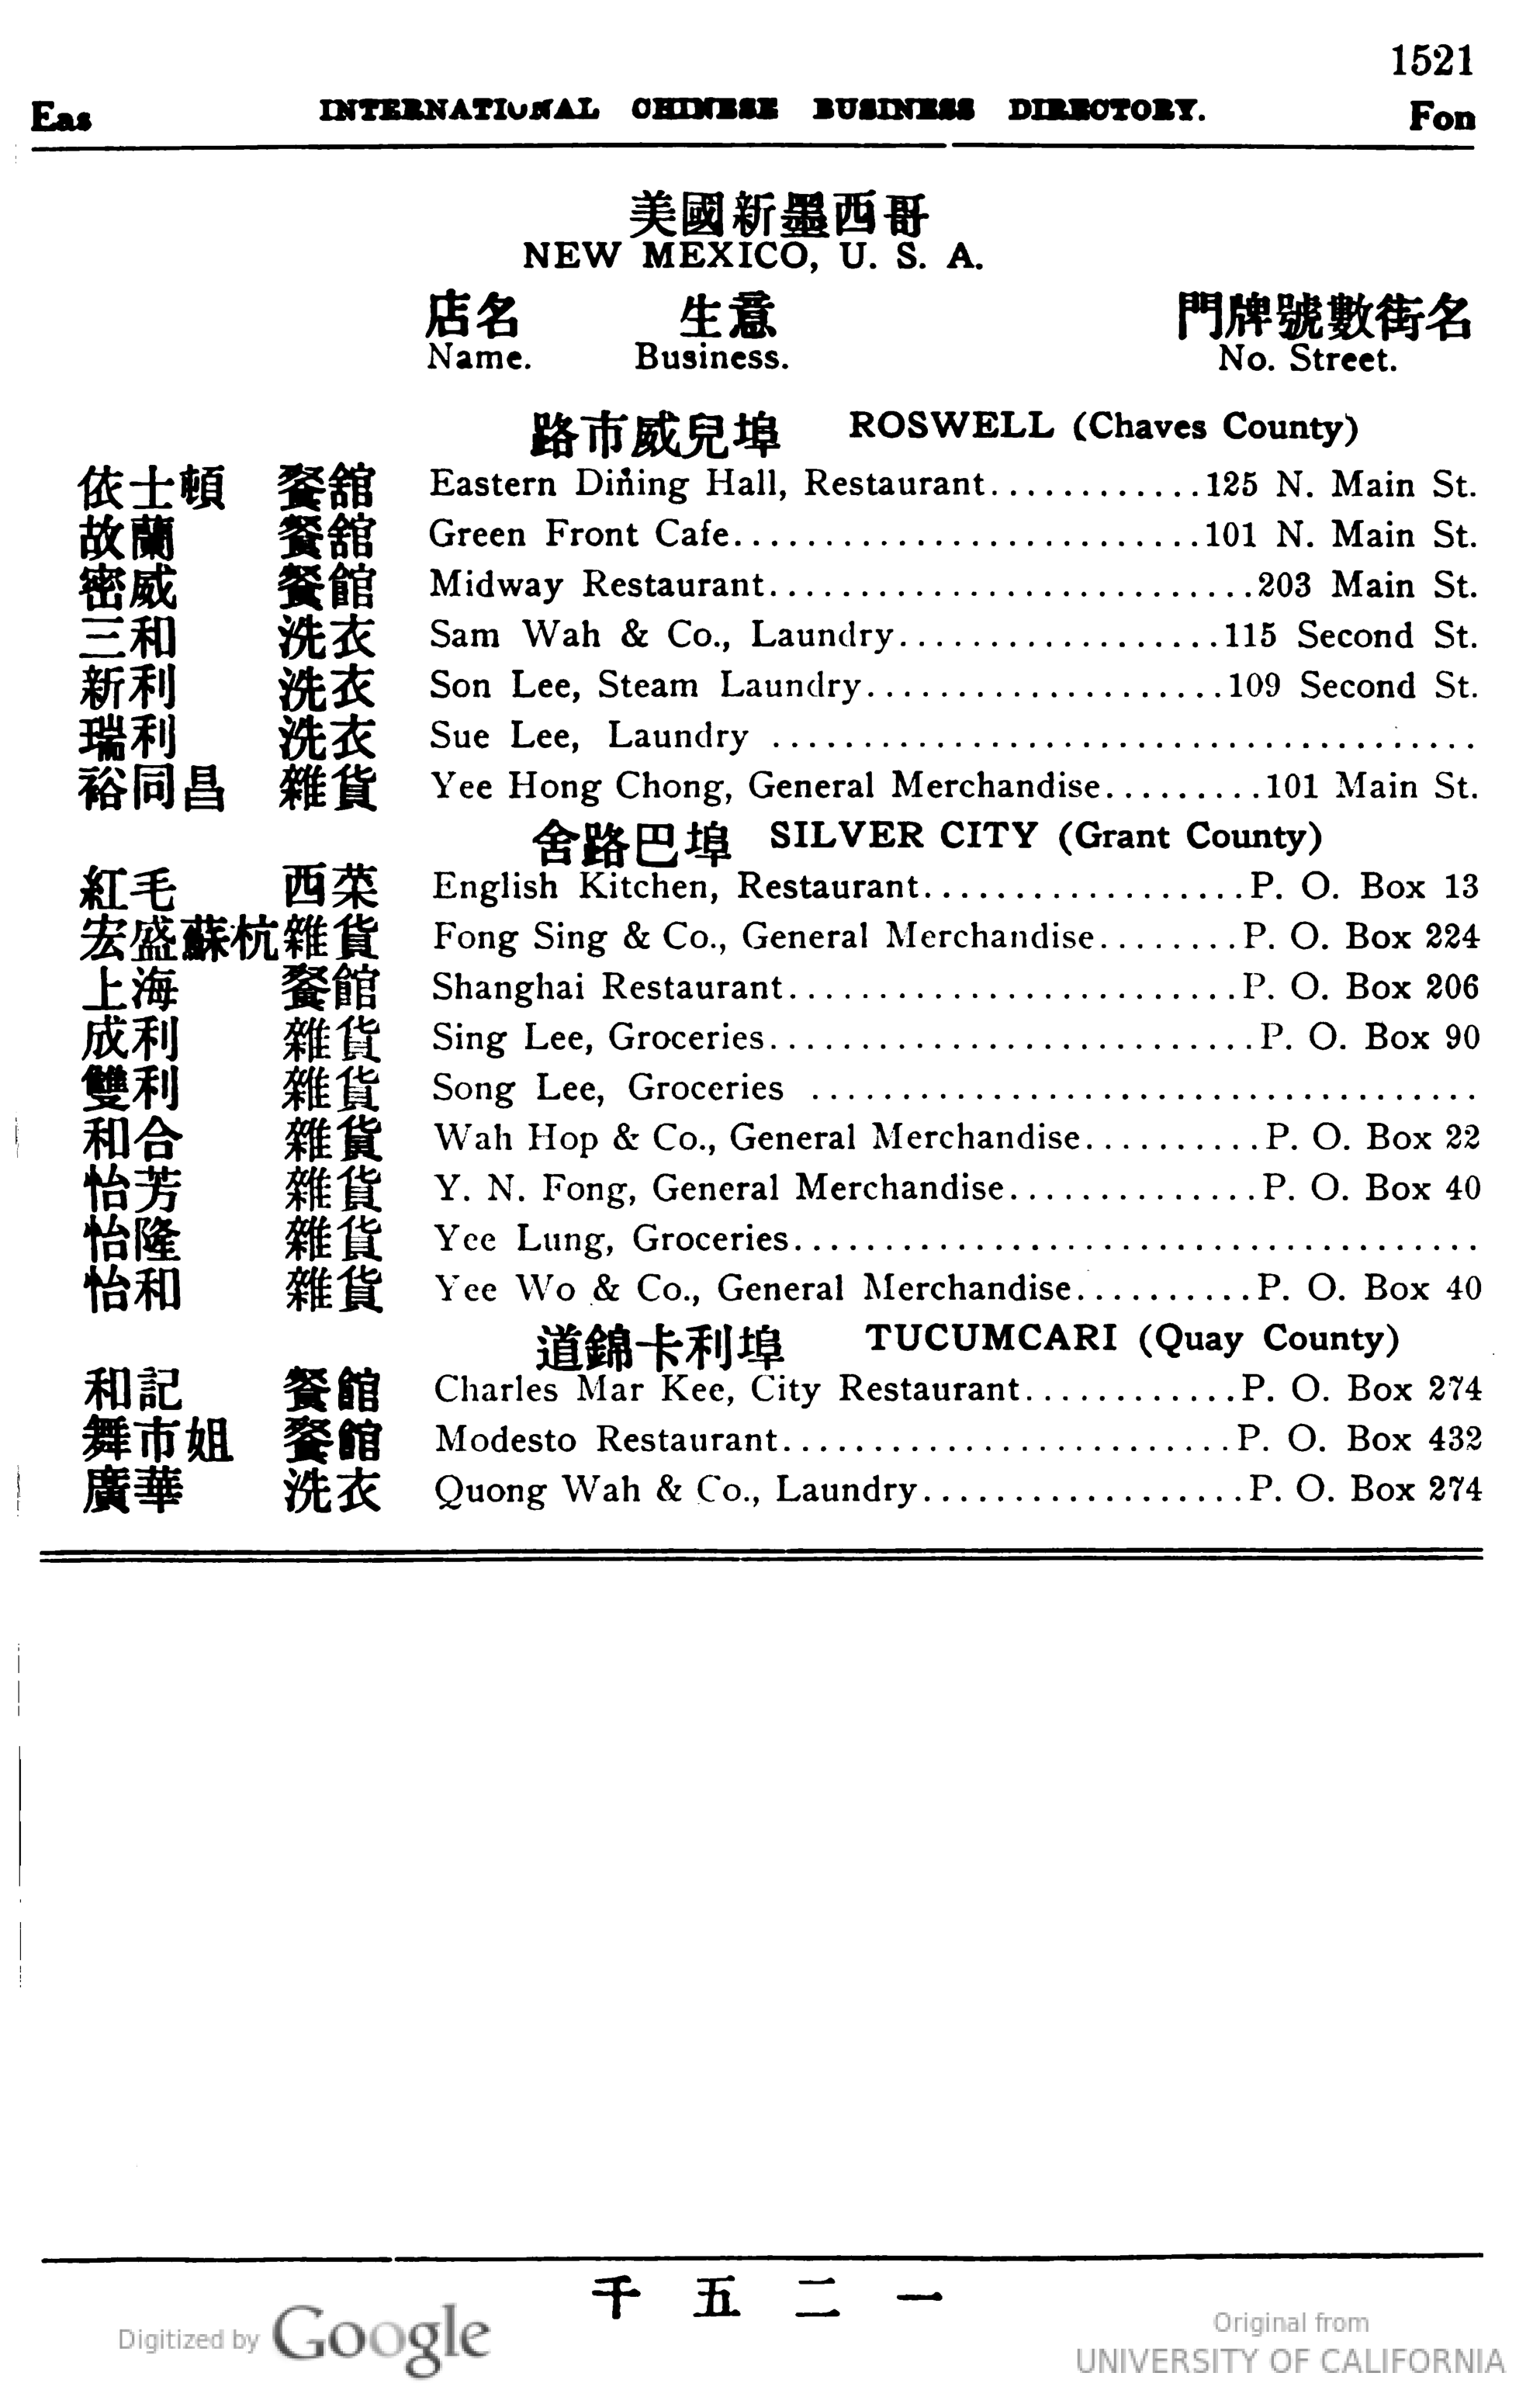 https://www.unm.edu/~toh/china/directory-2.gif